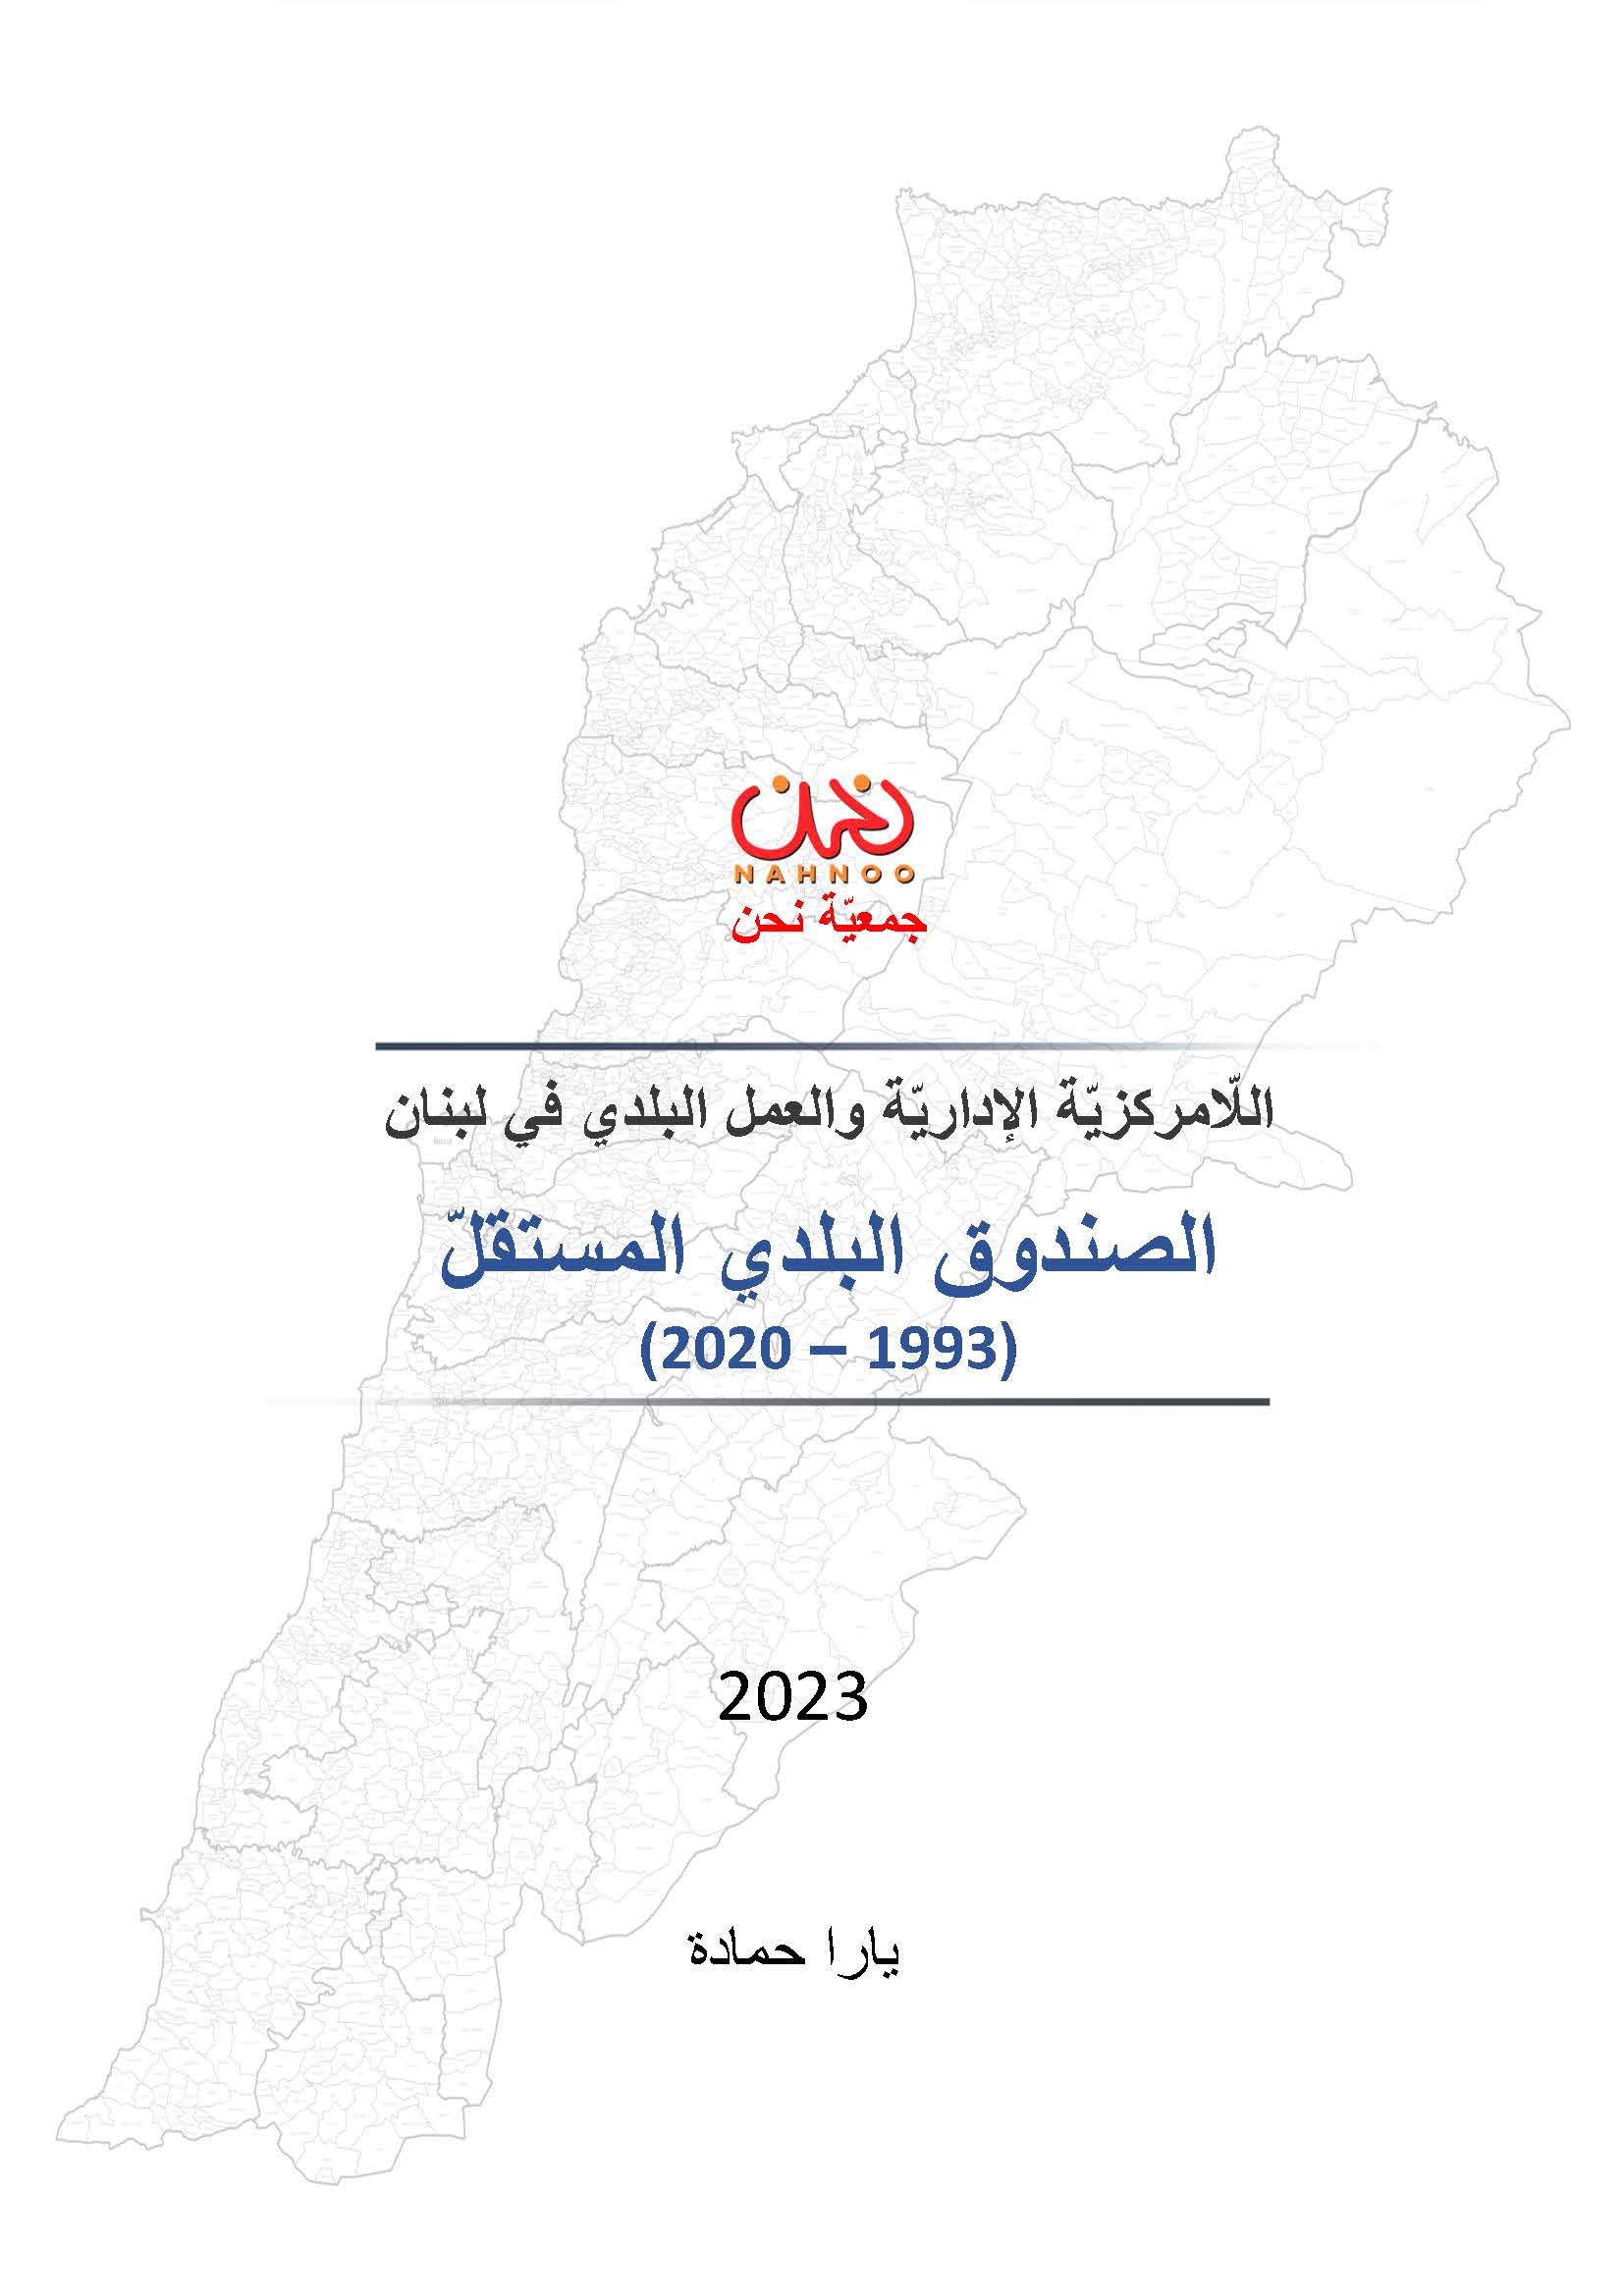 Decentrlization and Municipal Work in Lebanon 2023-IMF 1993 to 2020